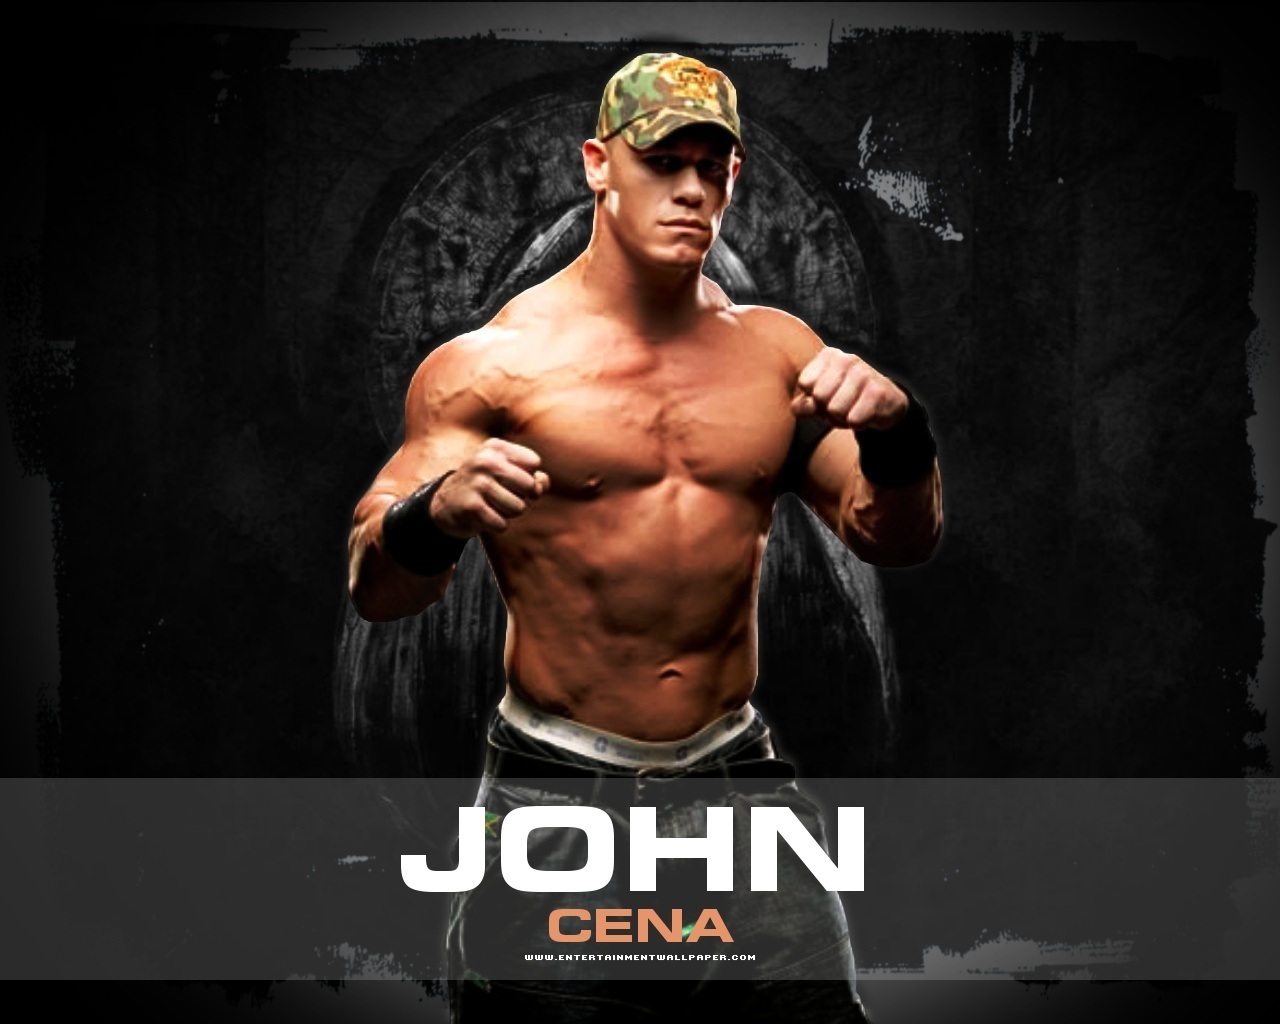 John Cena Hd Wallpapers - John Cena 3d - 1280x1024 Wallpaper 